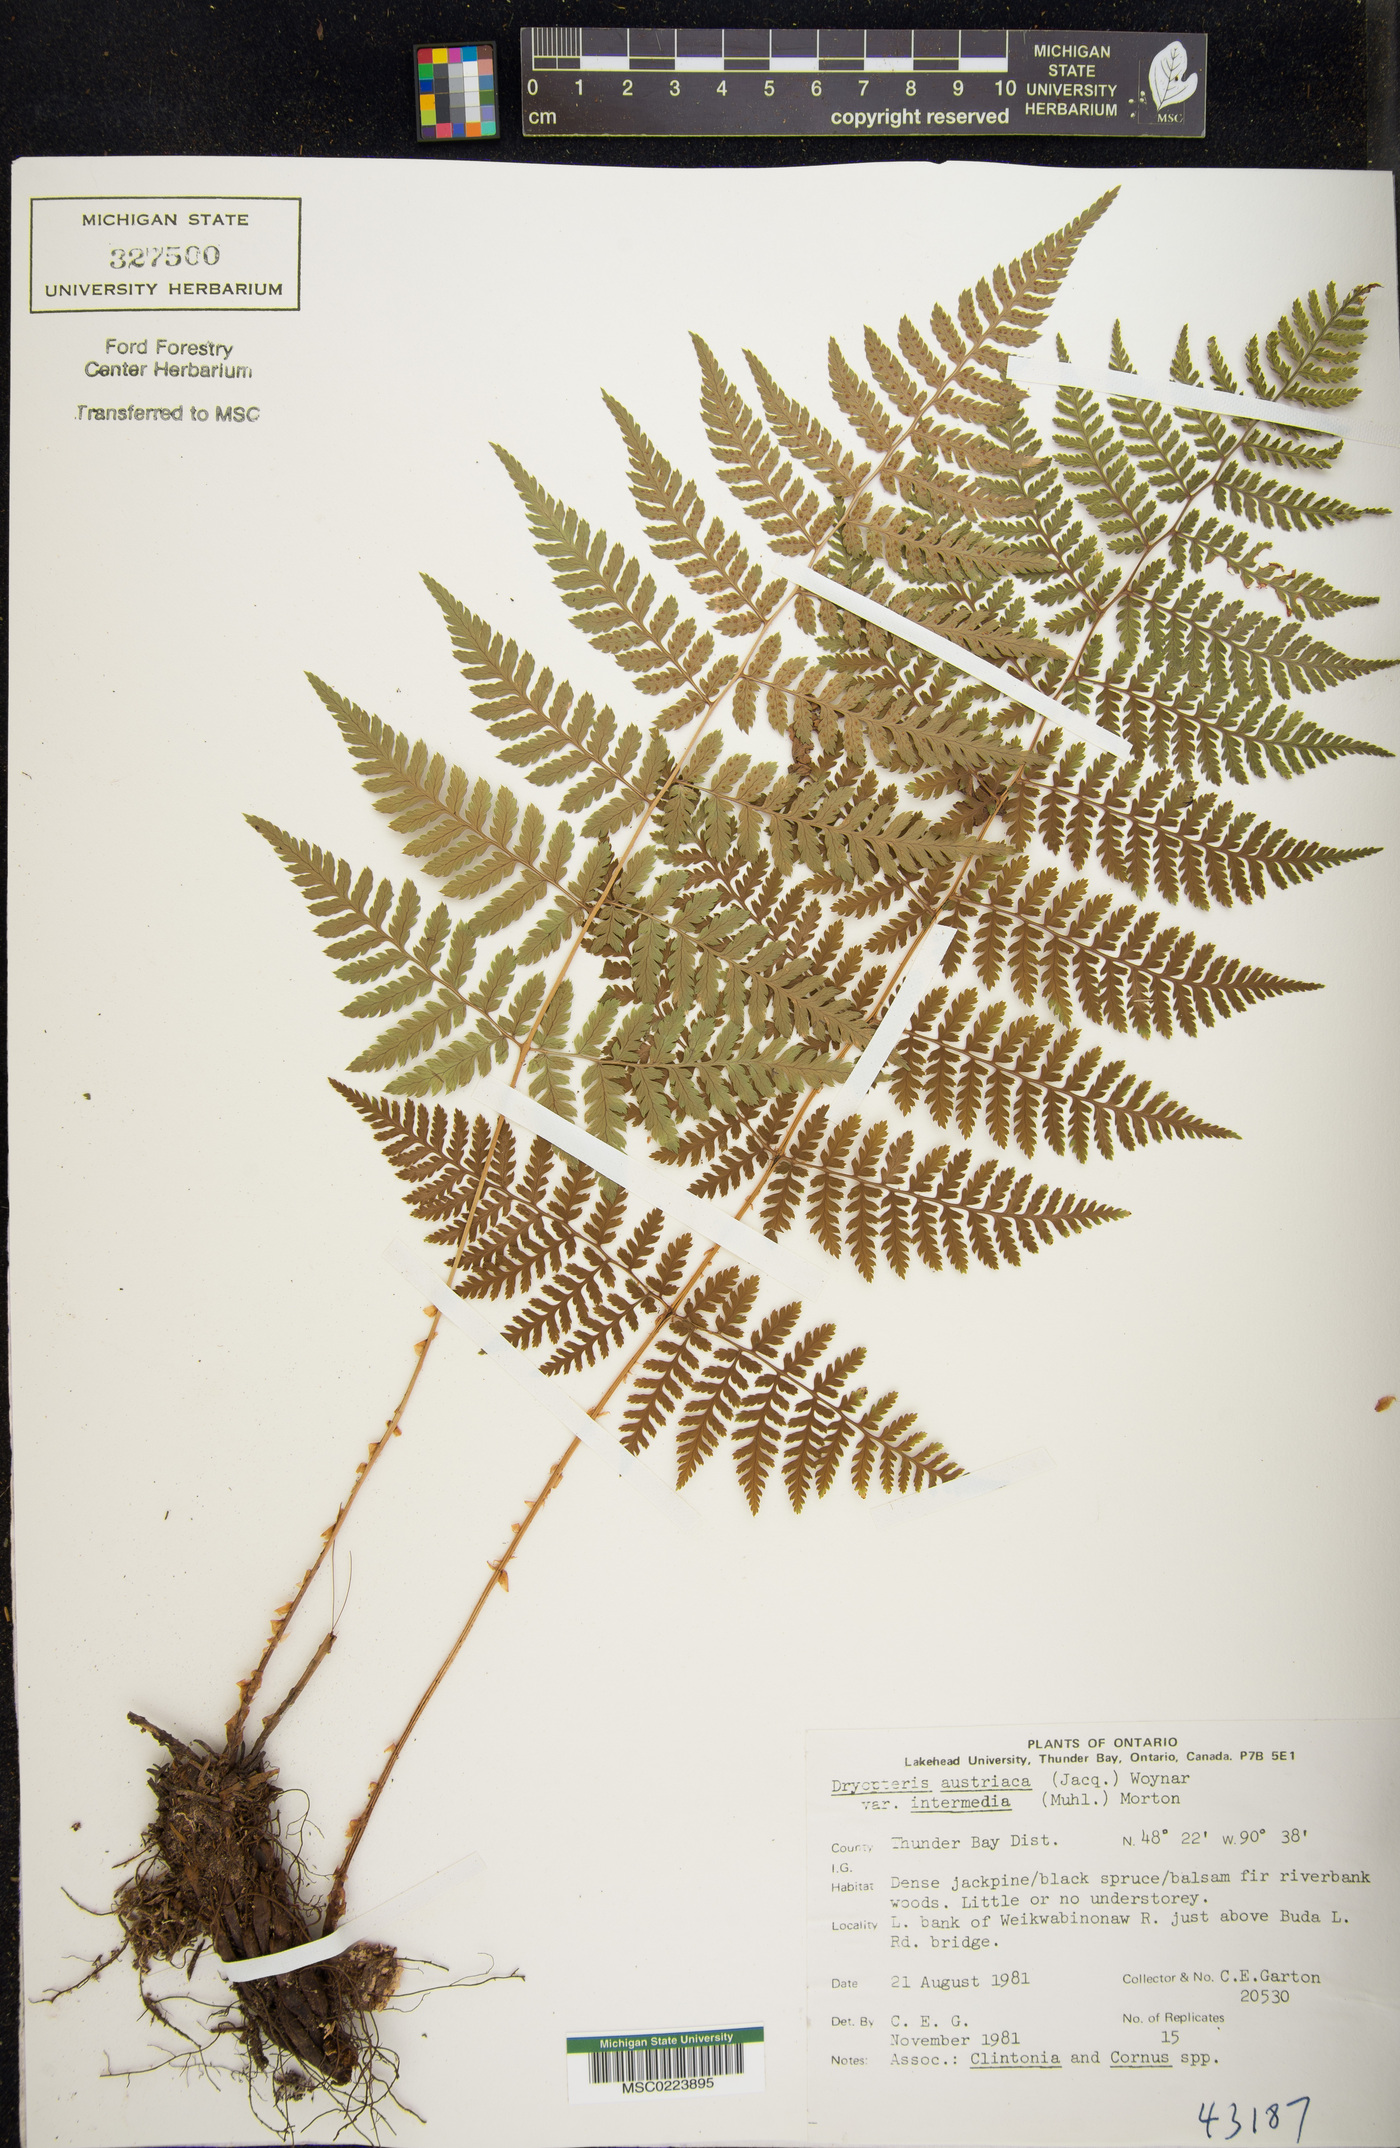 Dryopteris intermedia subsp. intermedia image